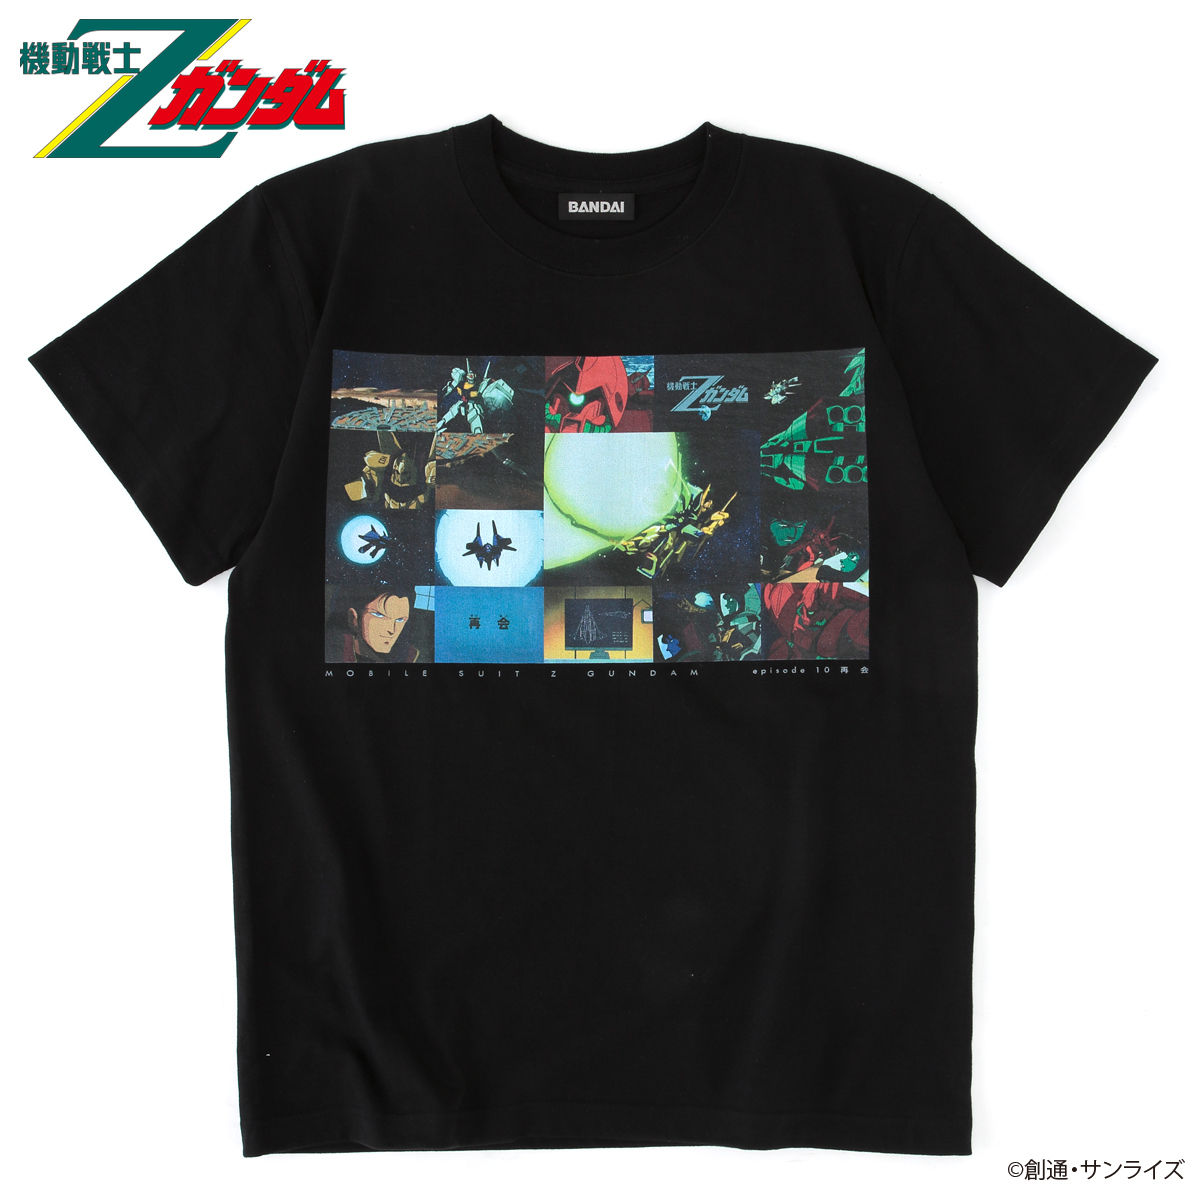 Reunion T-shirt—Mobile Suit Zeta Gundam